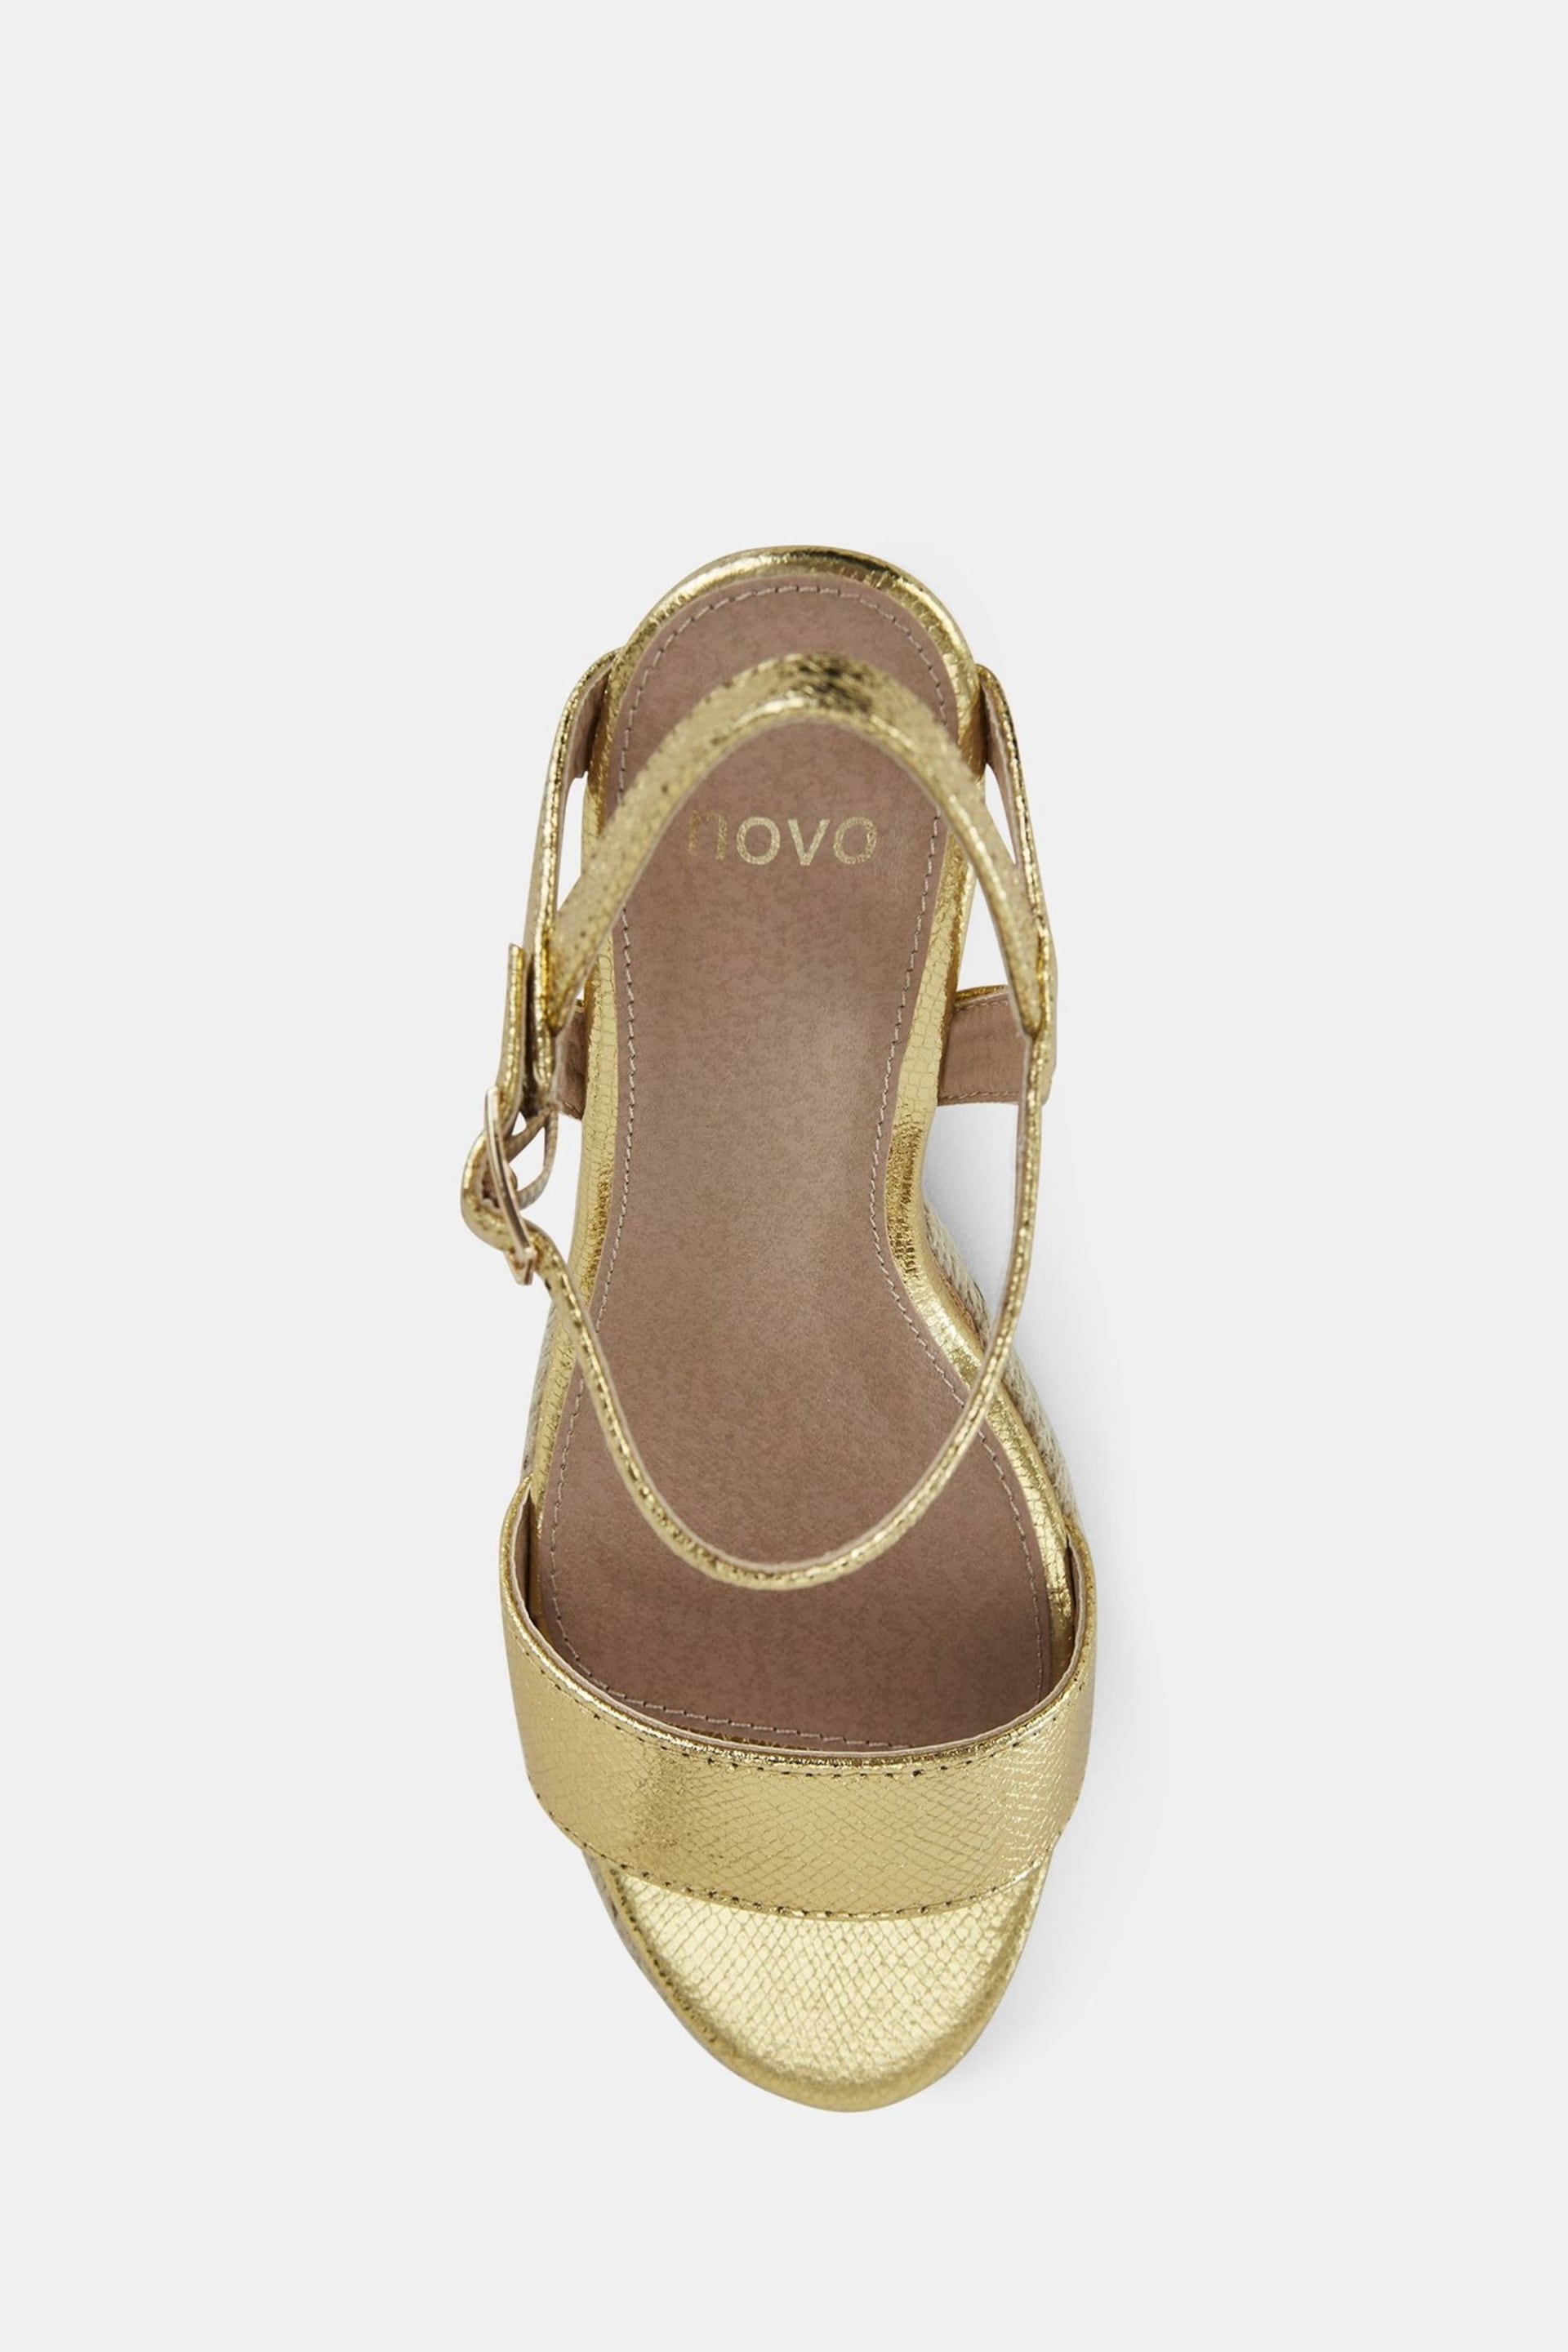 Novo Gold Regular Fit Booma Cork Wedge Sandals - Image 6 of 6